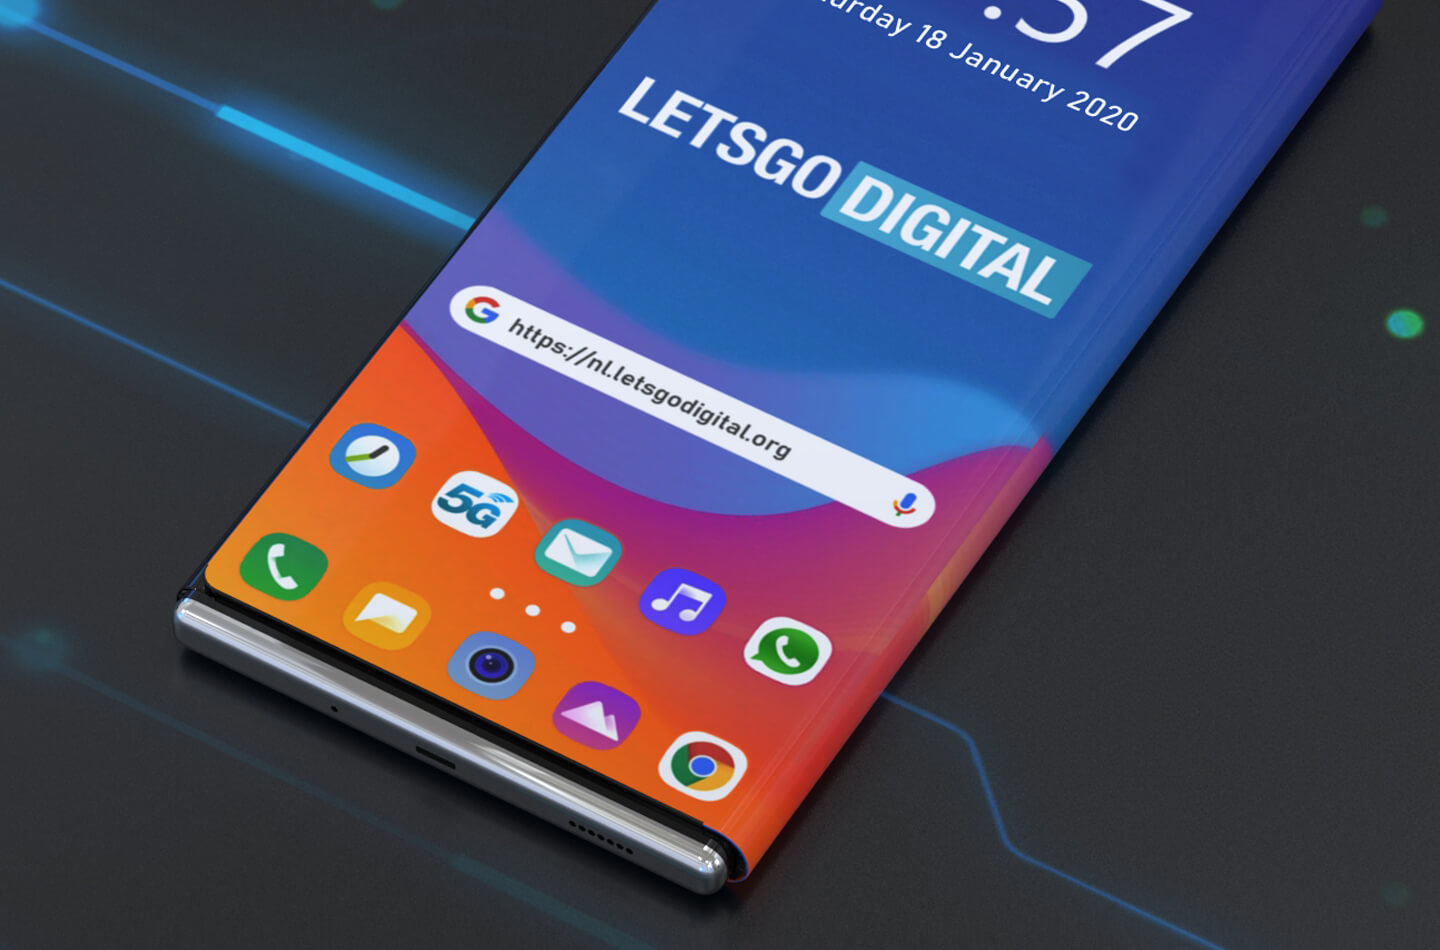 LG telefoon 2020 model met flexibel wrap-around scherm | LetsGoDigital